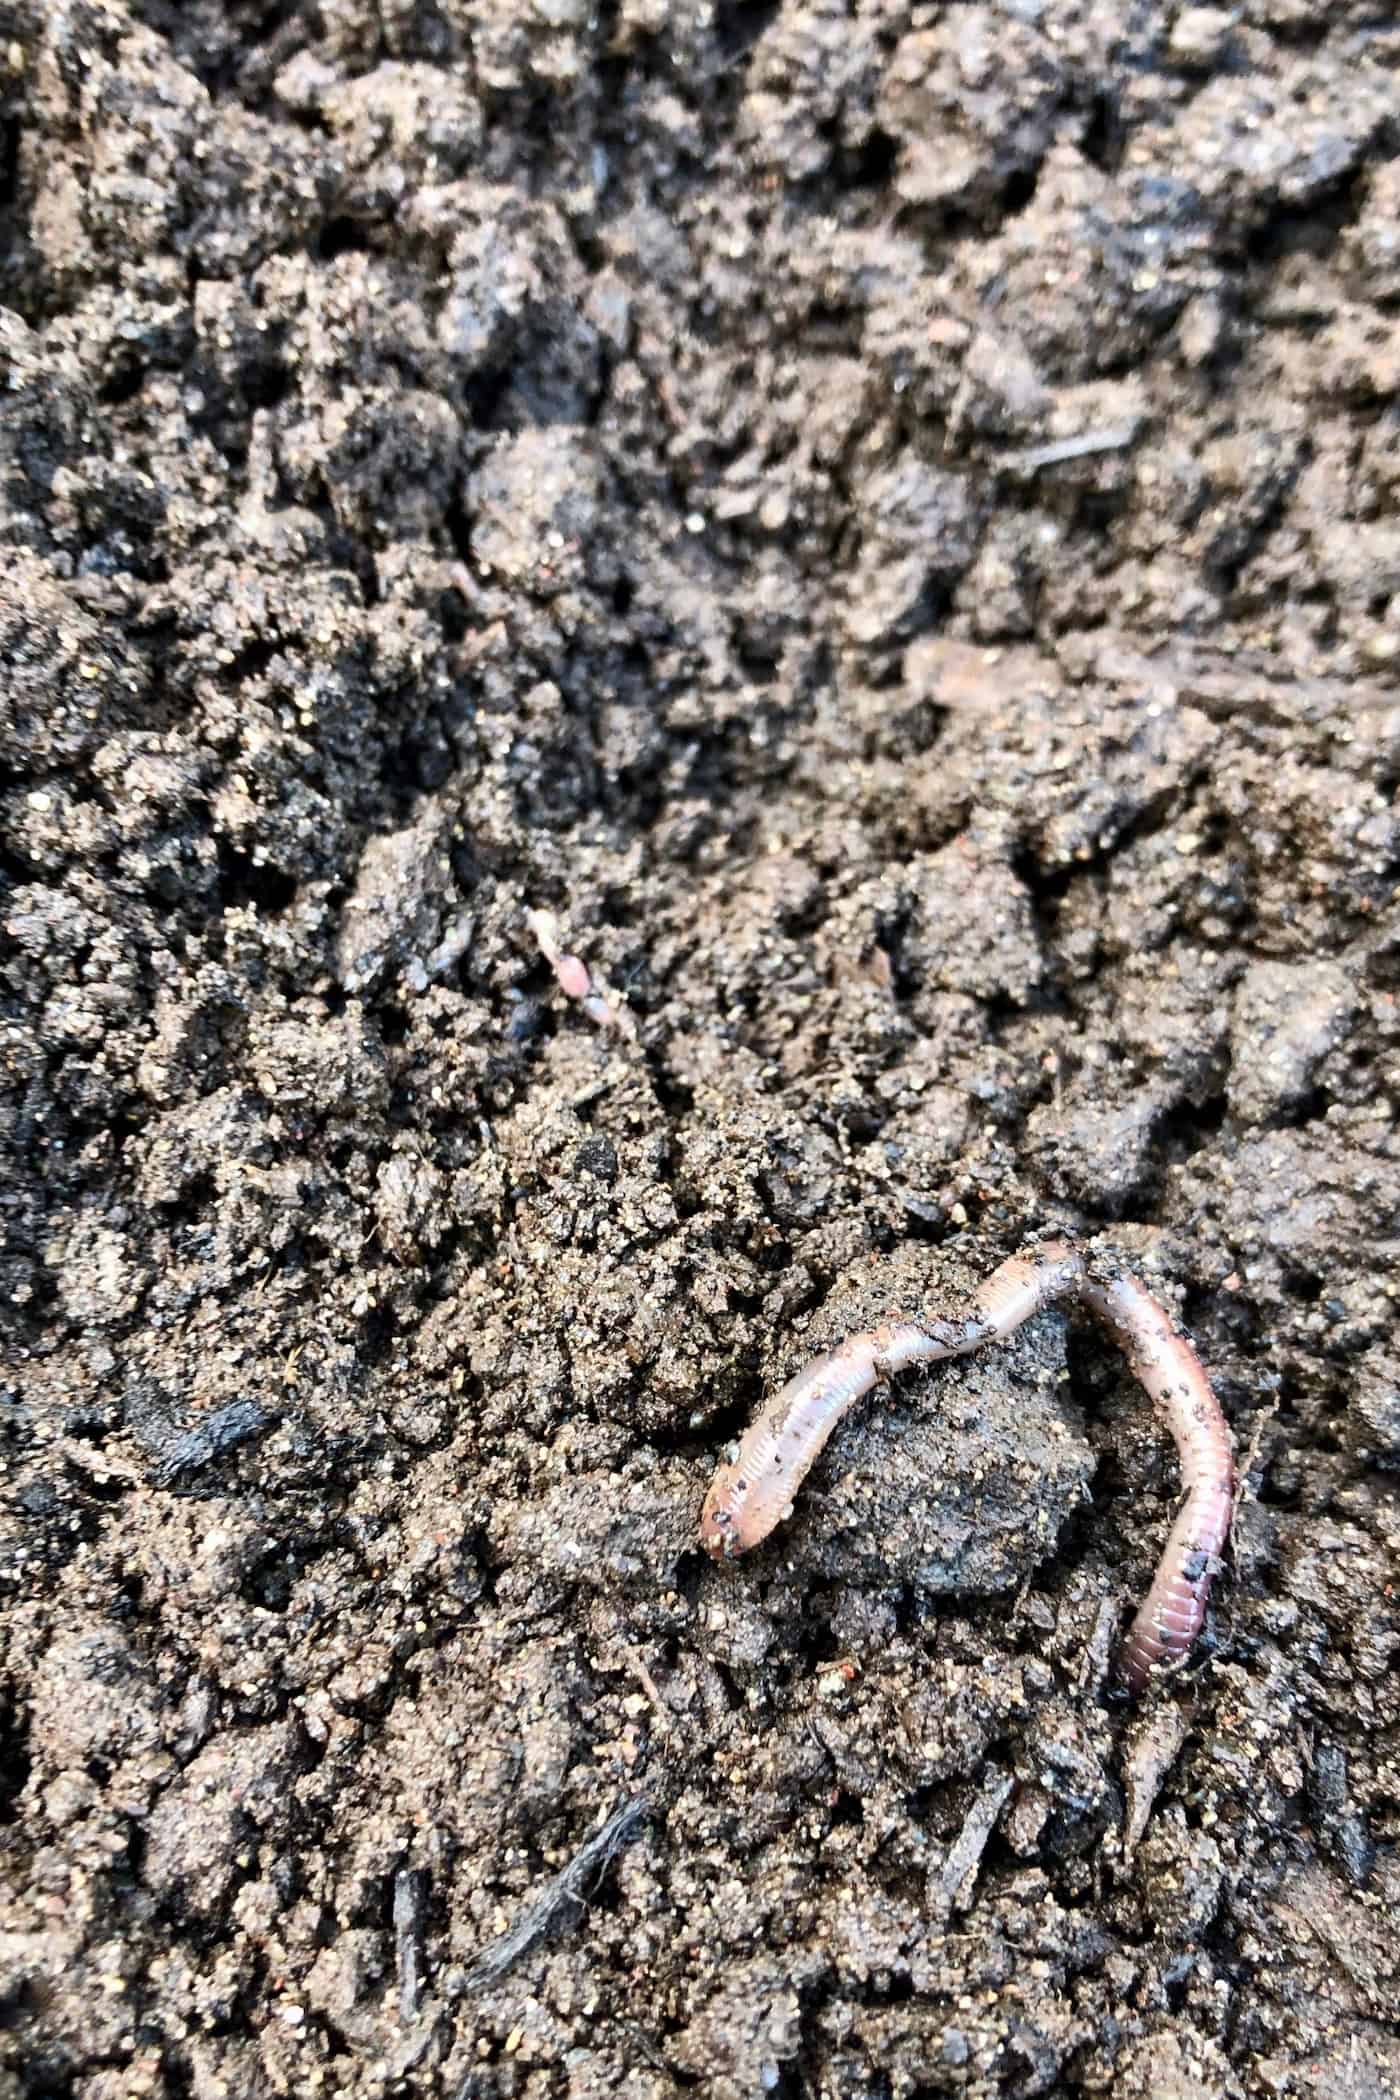 Earthworm on soil